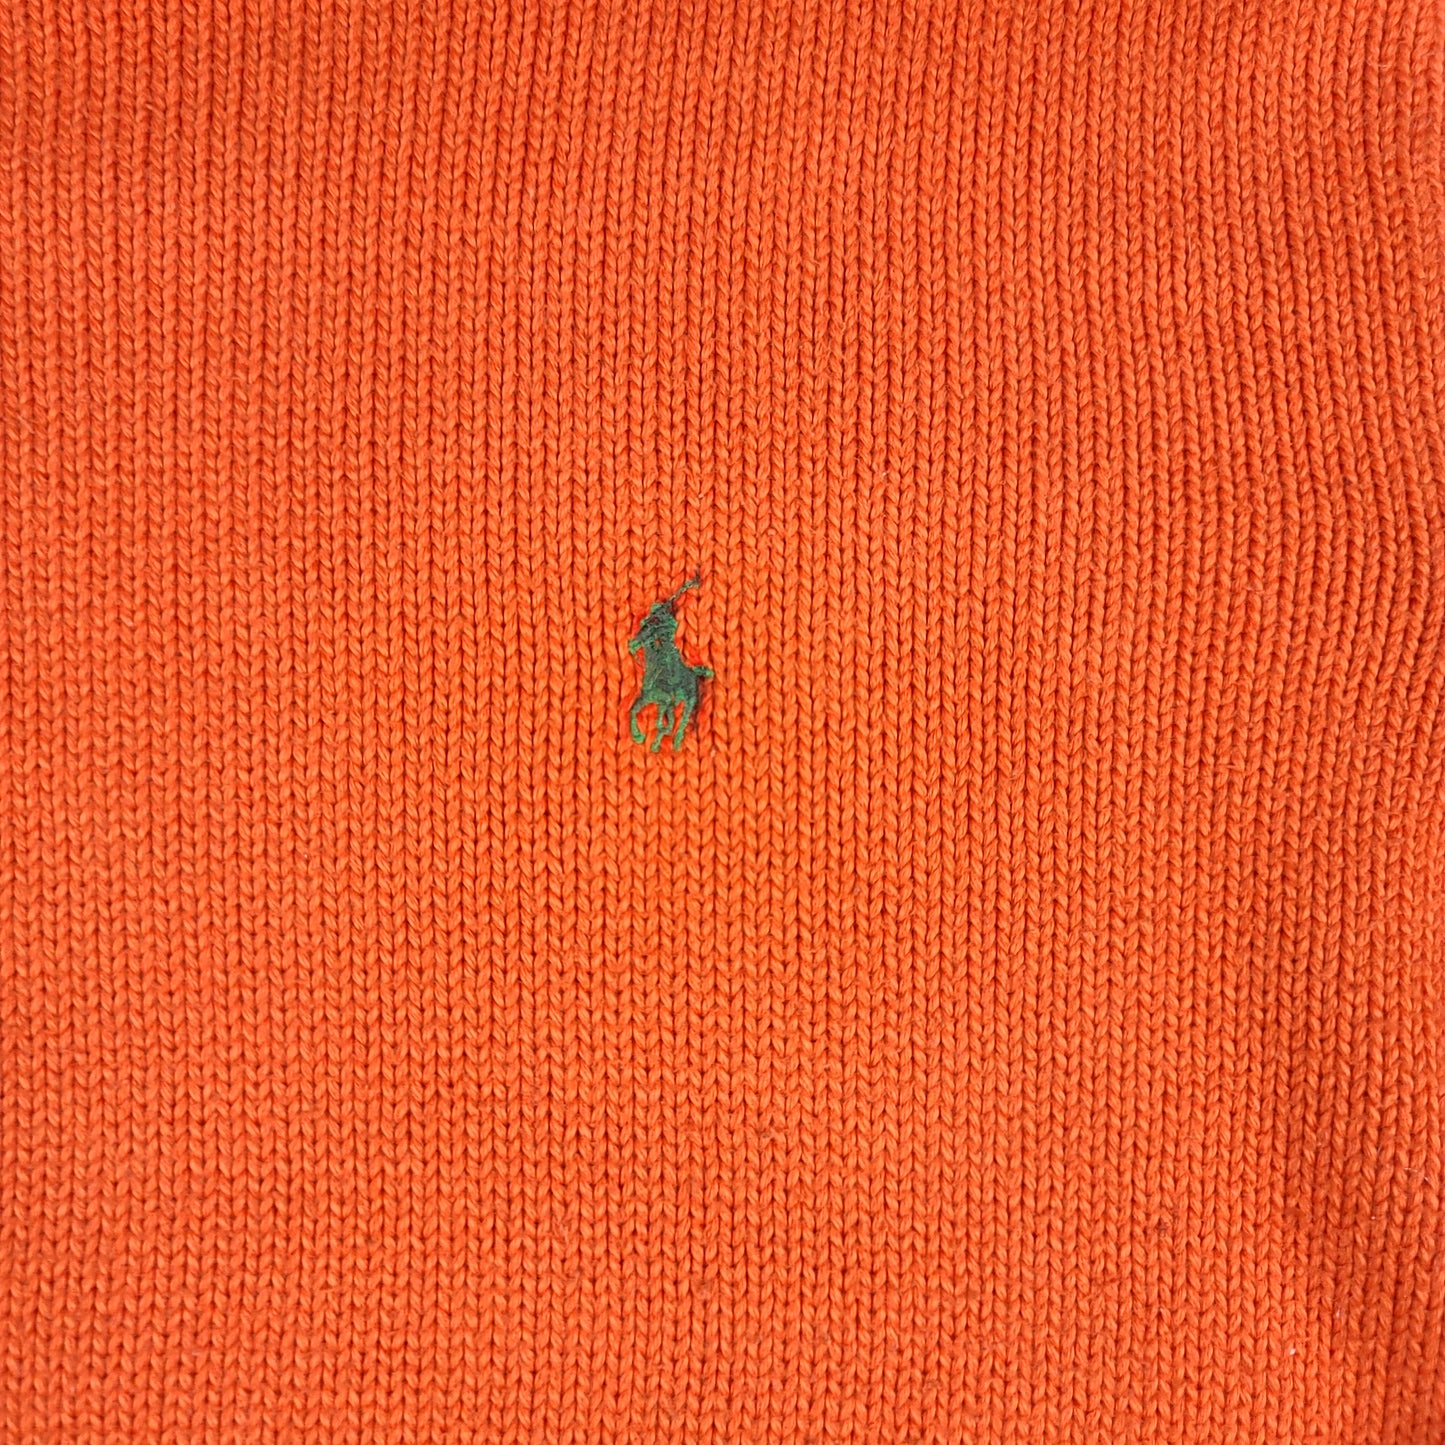 Vintage Polo Ralph Lauren Orange Knit Sweater